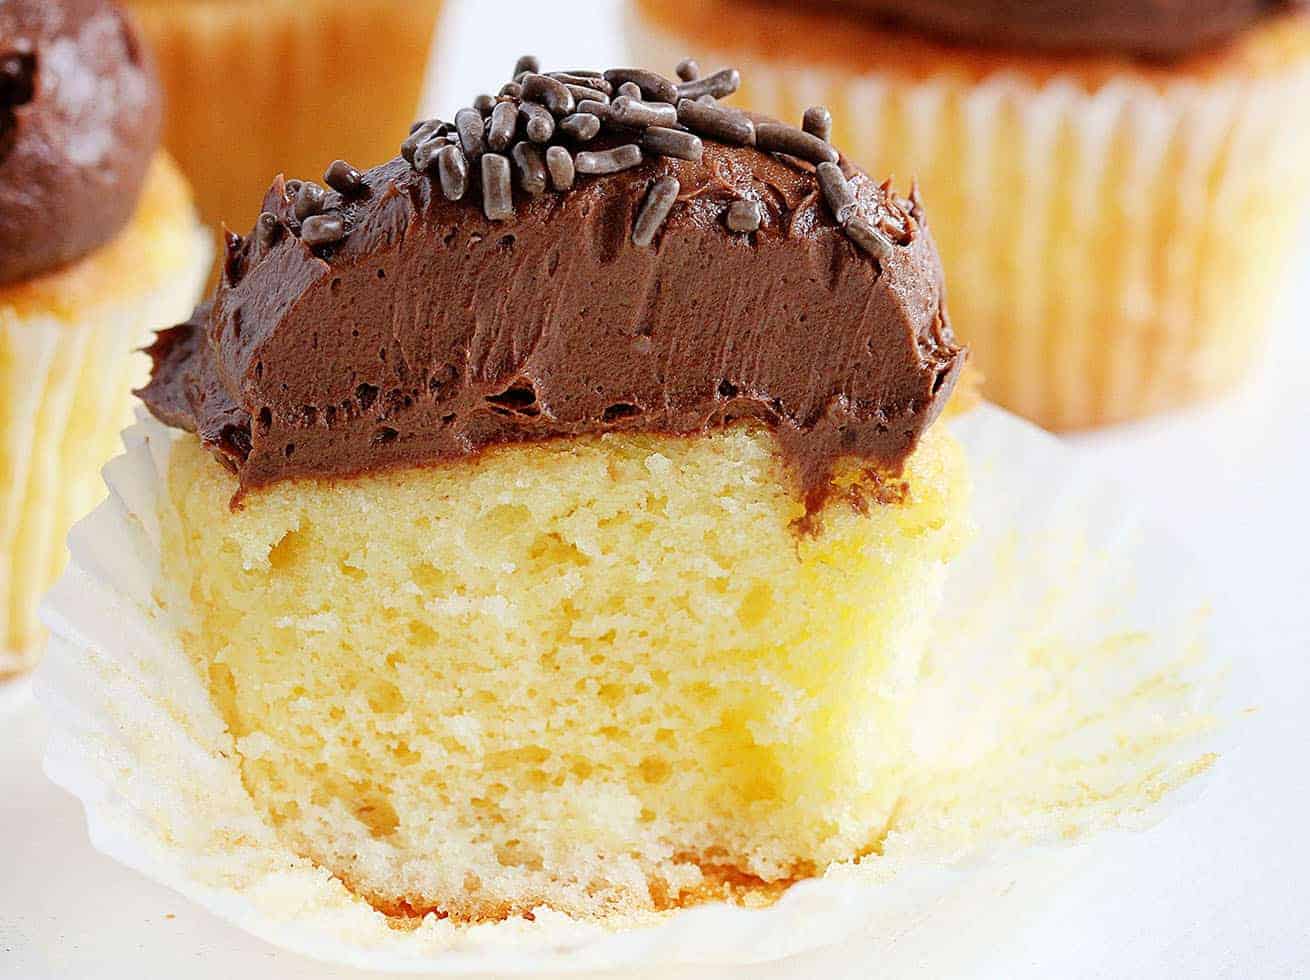 yellow-cupcake